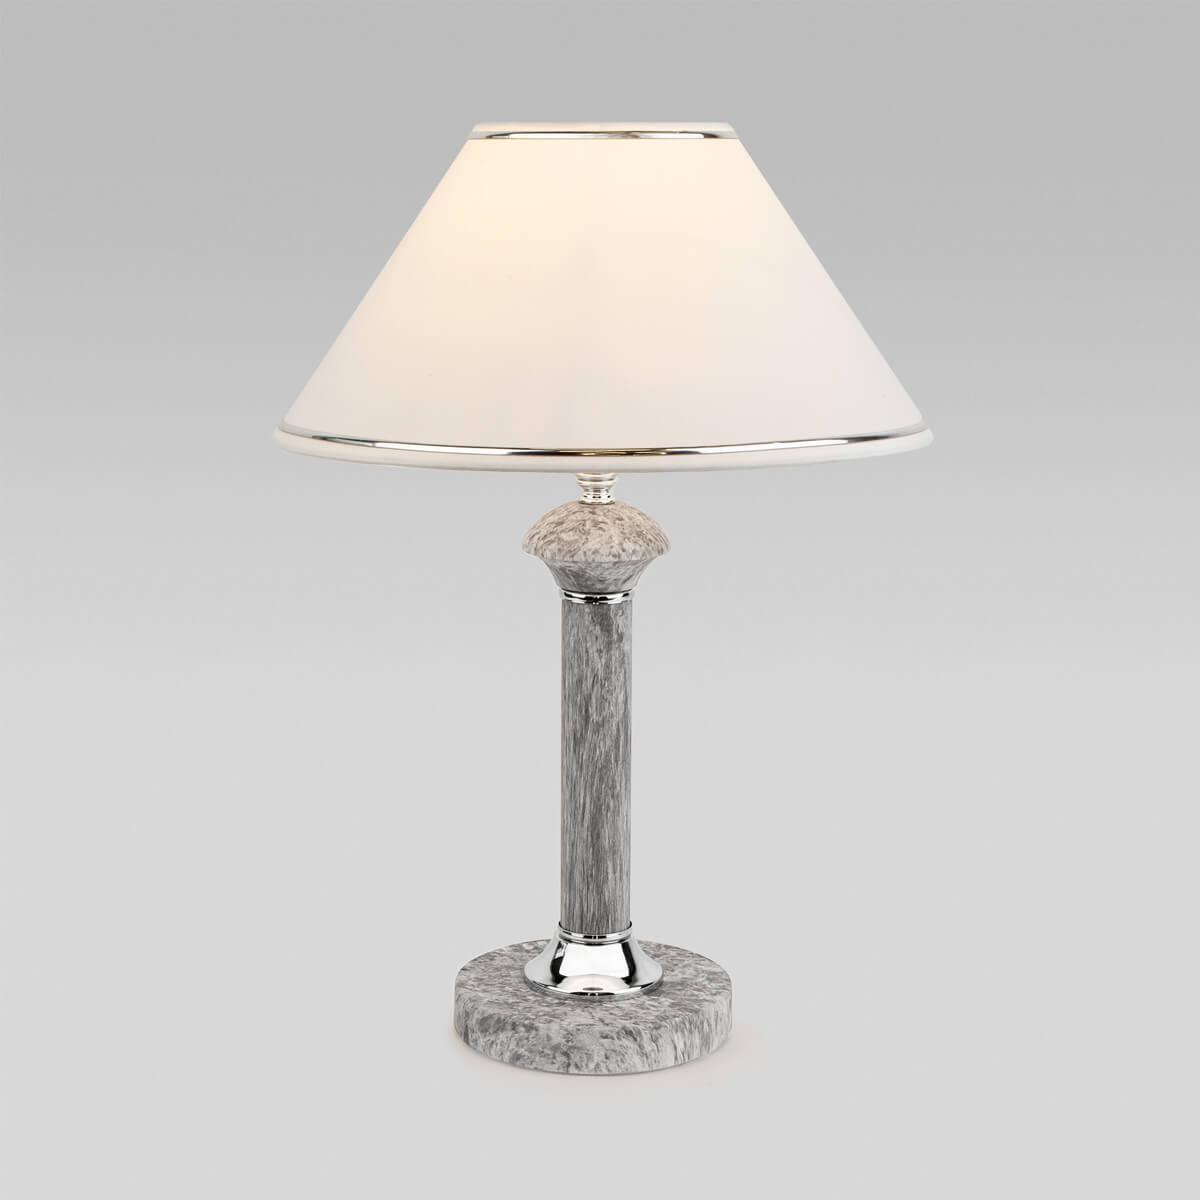 Настольная лампа Eurosvet Lorenzo 60019/1 мрамор держатель пера мрамор cretacolor